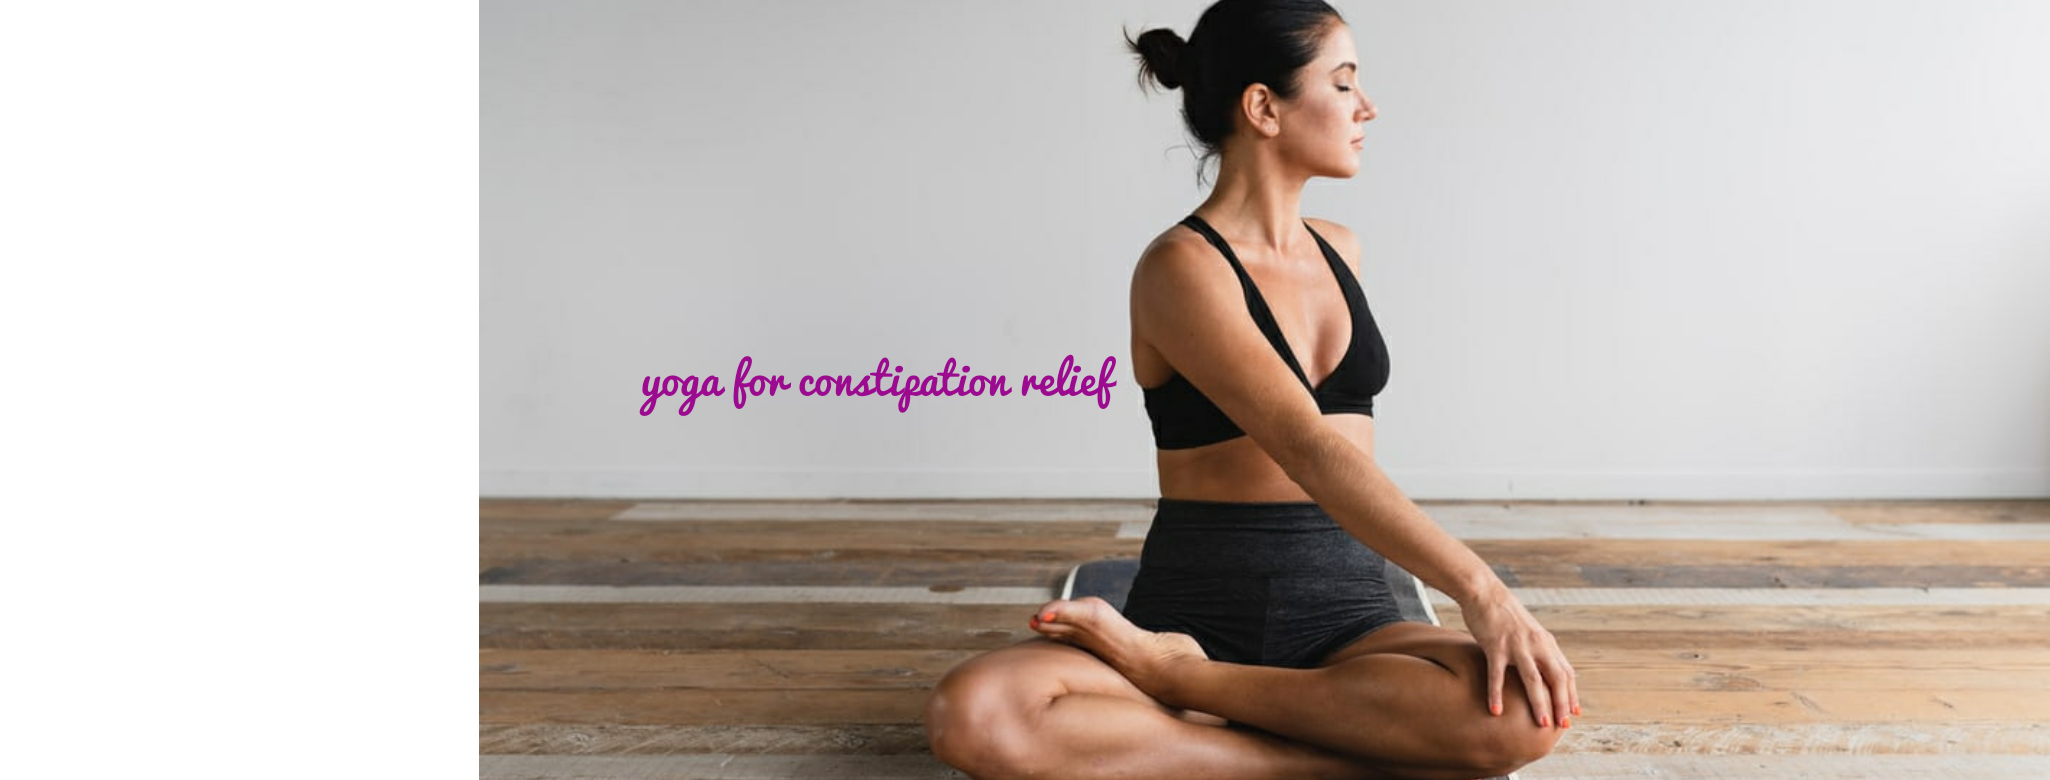 Yoga Poses & Exercises : Yoga Poses for Hemorrhoids - YouTube